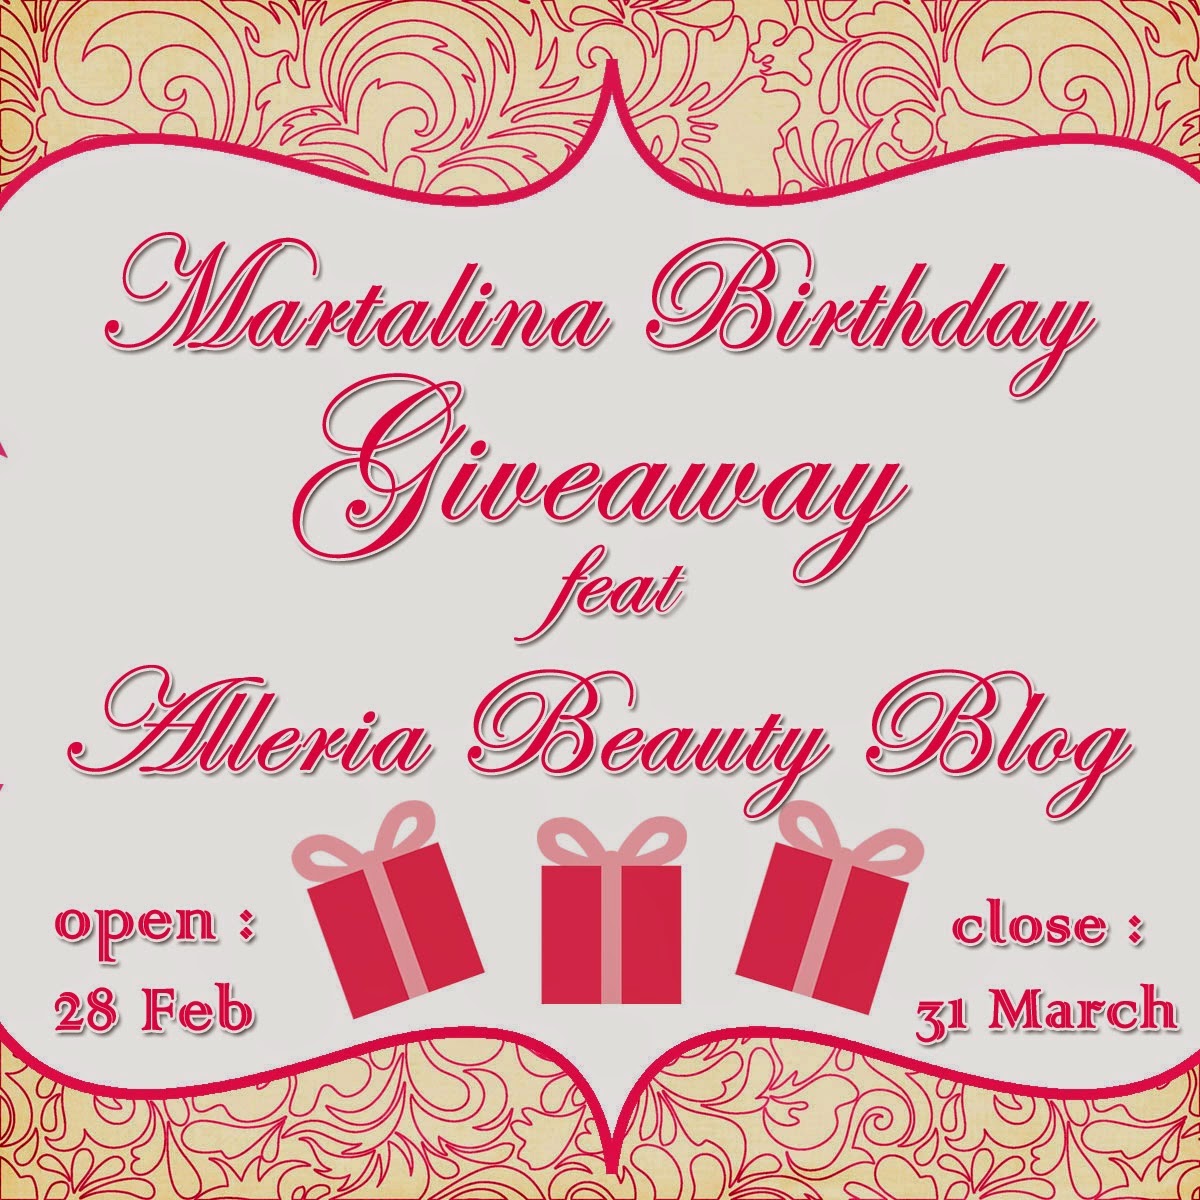 http://alleriamakeupartist.blogspot.com/2015/02/martalina-birthday-giveaway-feat.html